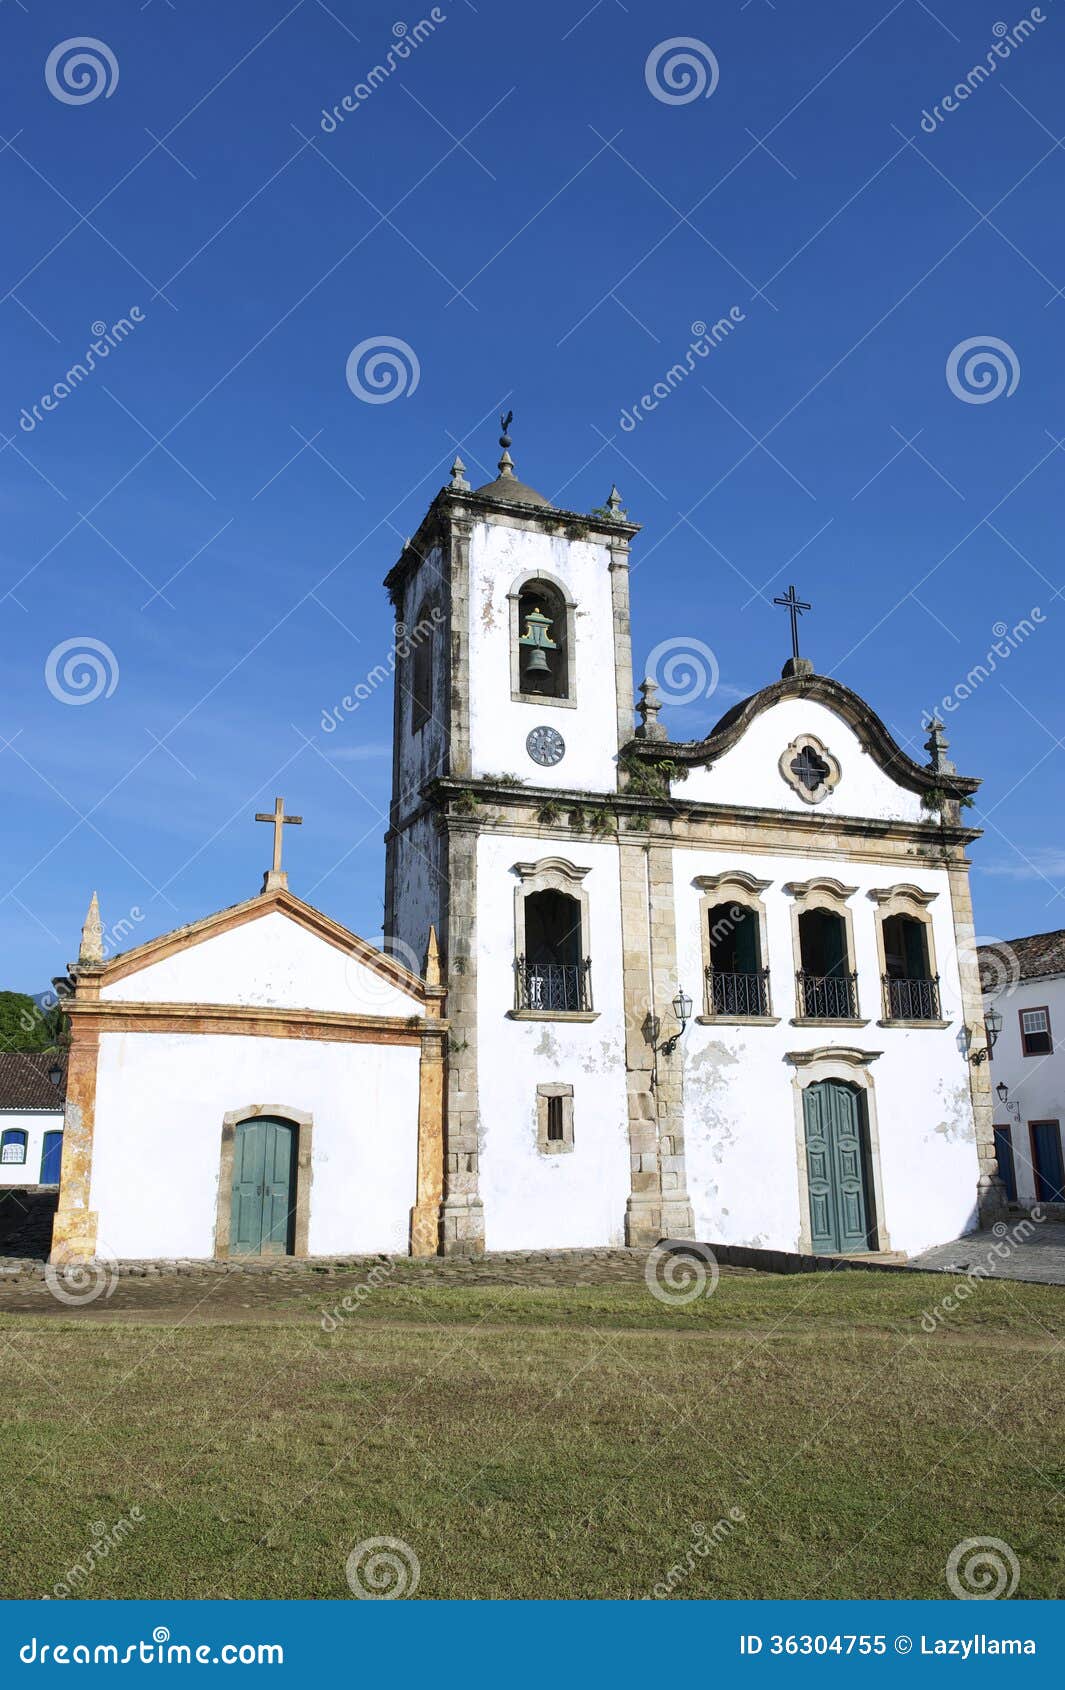 typical white colonial capela de santa rita church paraty brazil